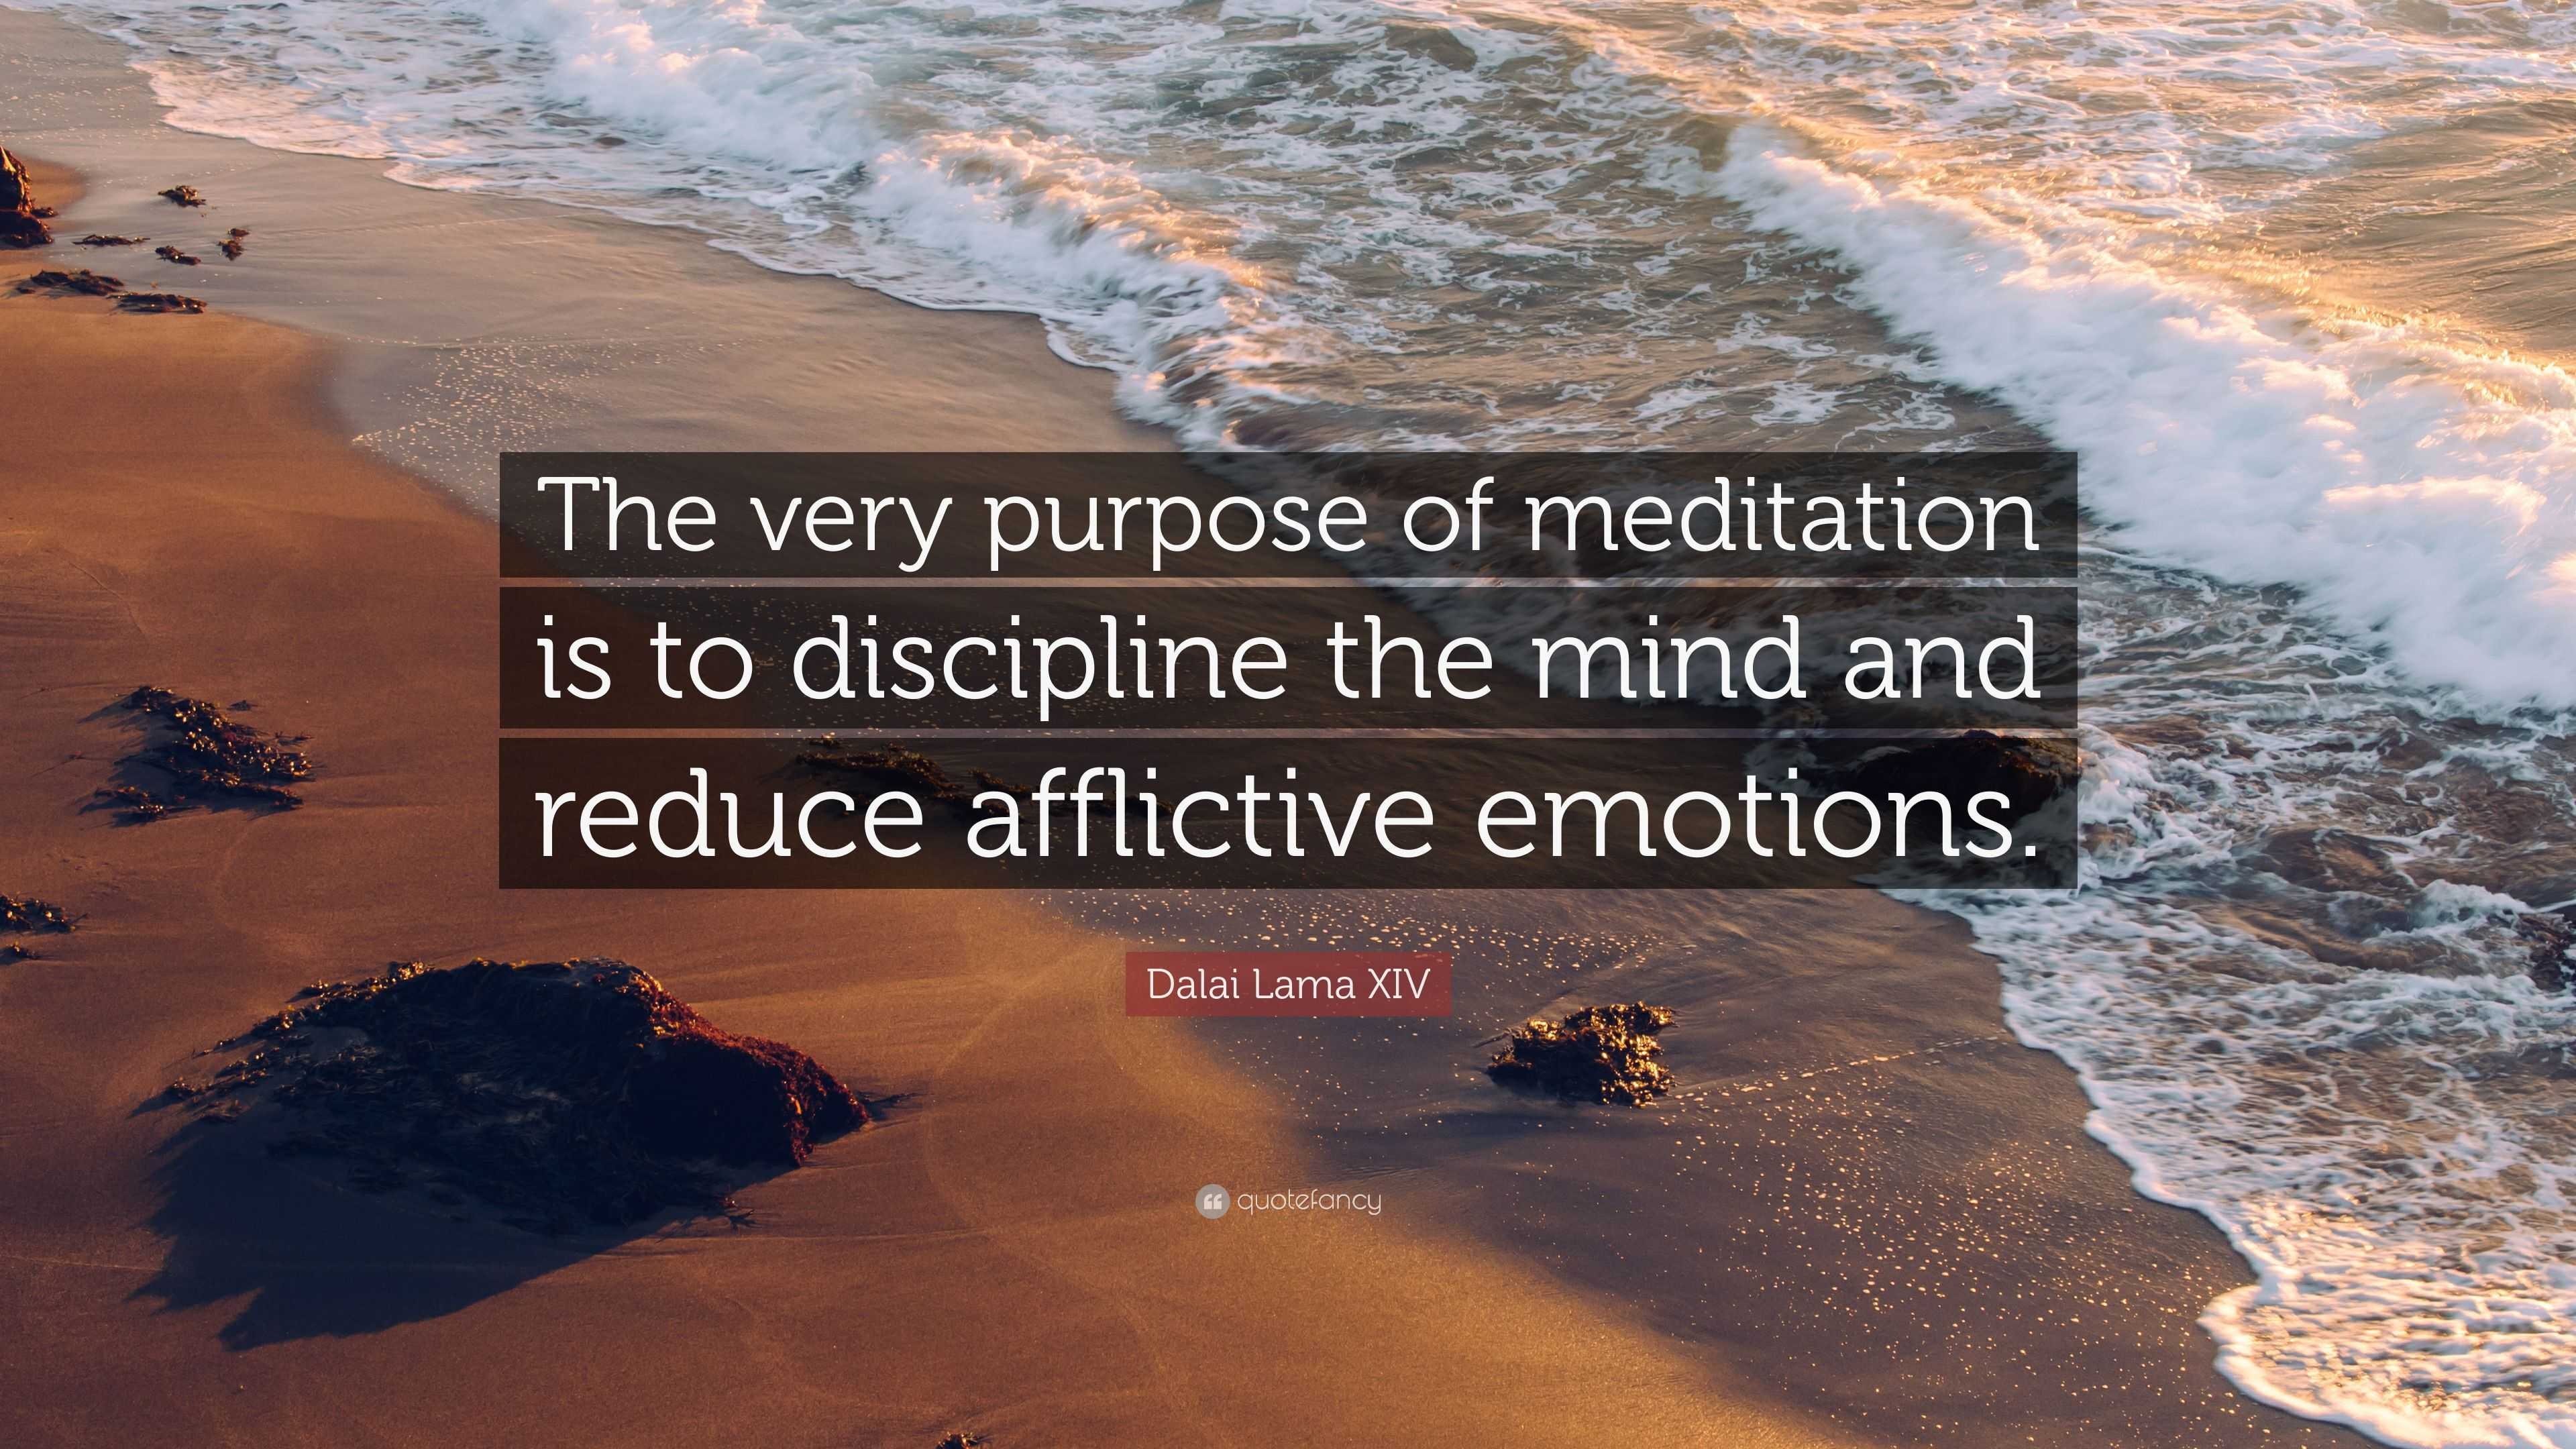 Dalai Lama XIV Quote “The very purpose of meditation is